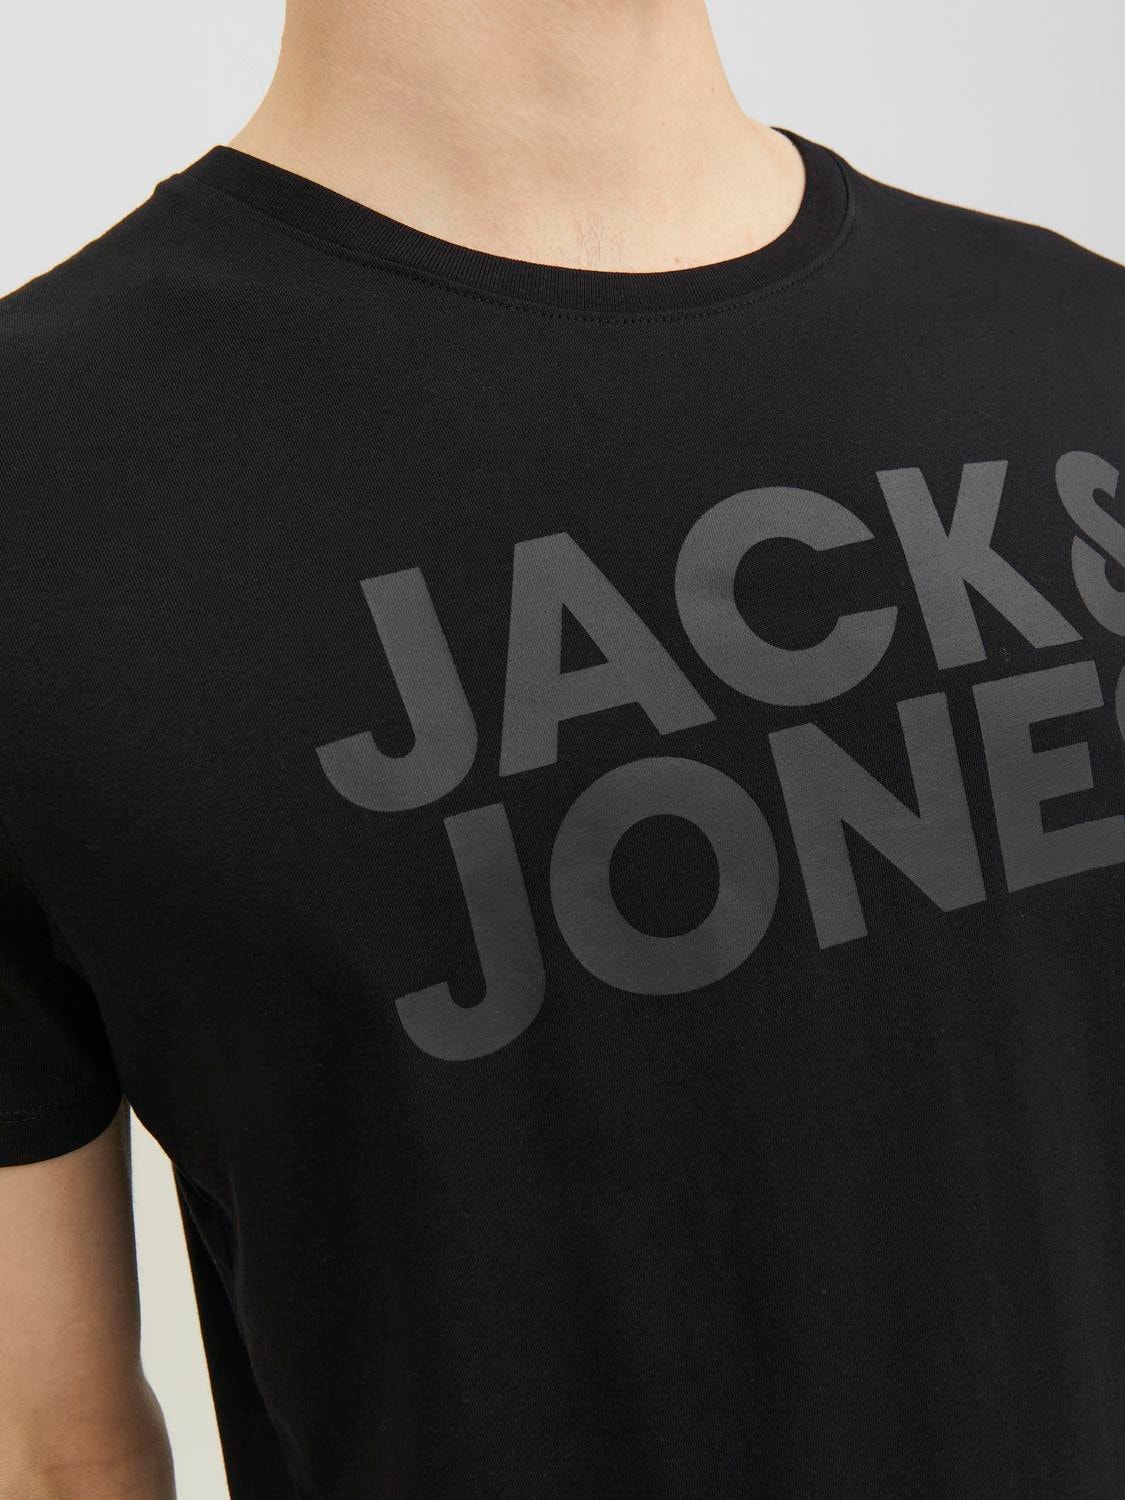 Jack & Jones Logo Crew neck T-shirt -Black - 12151955